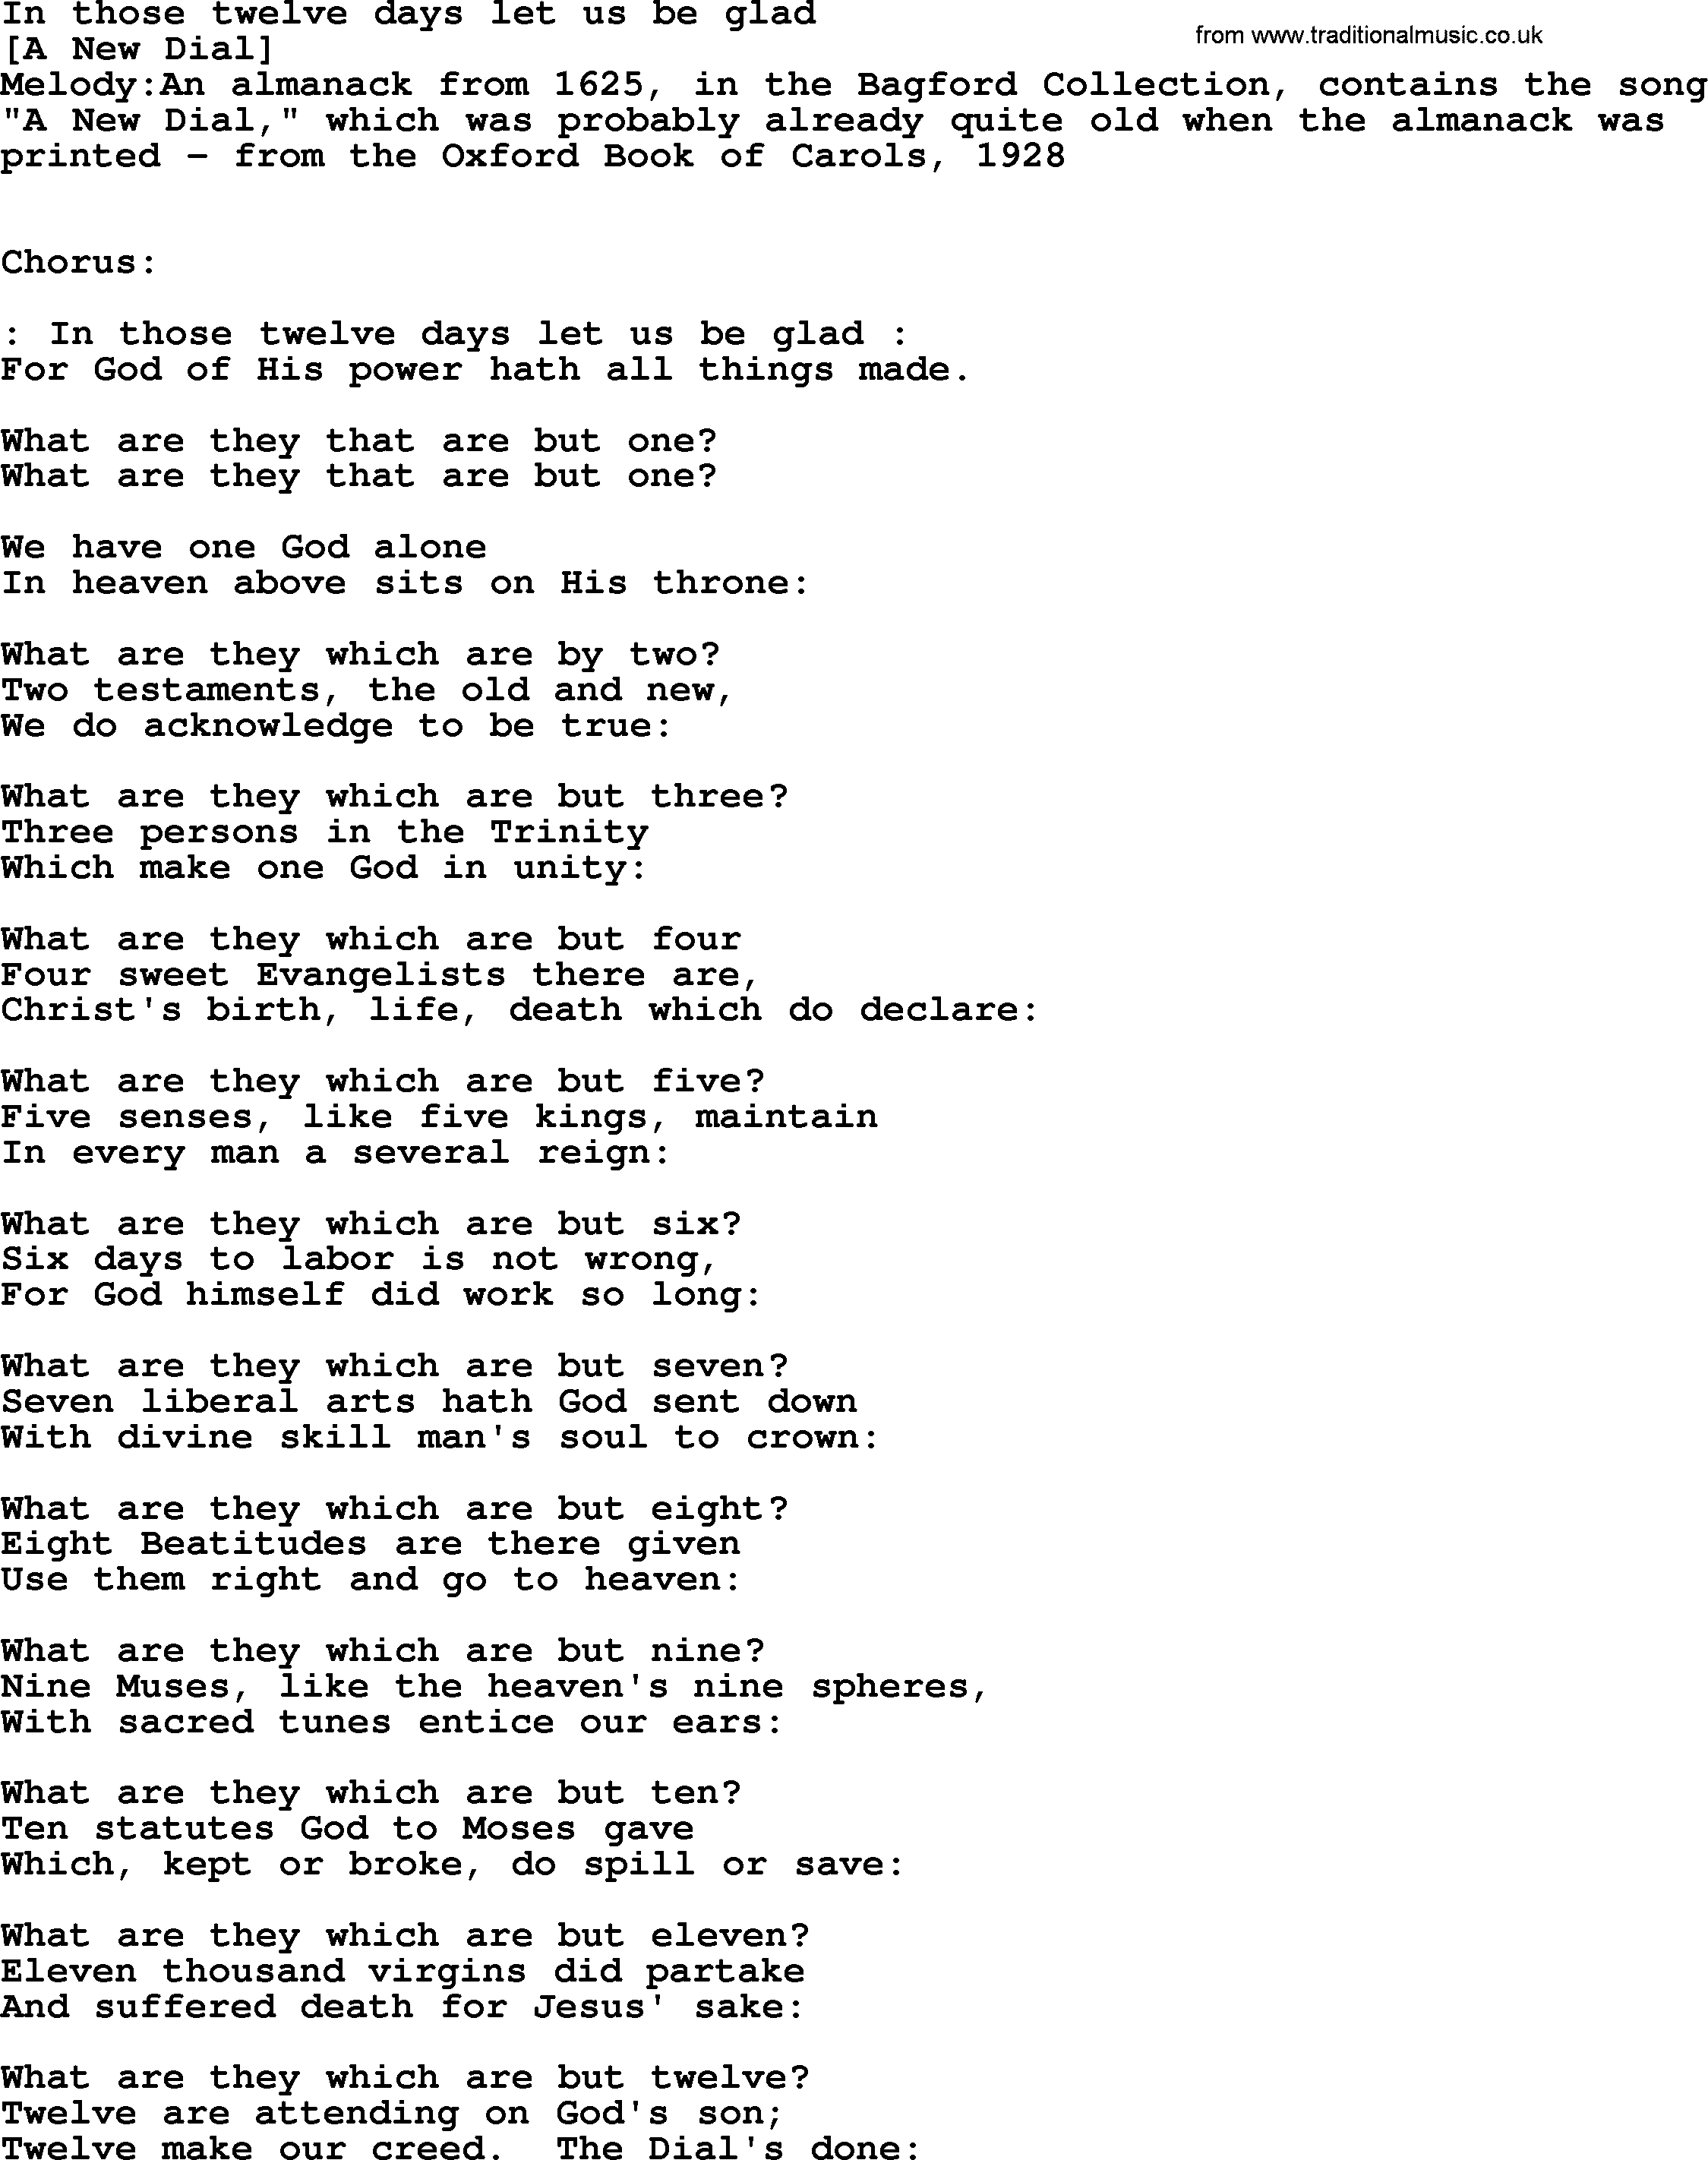 Old English Song: In Those Twelve Days Let Us Be Glad lyrics